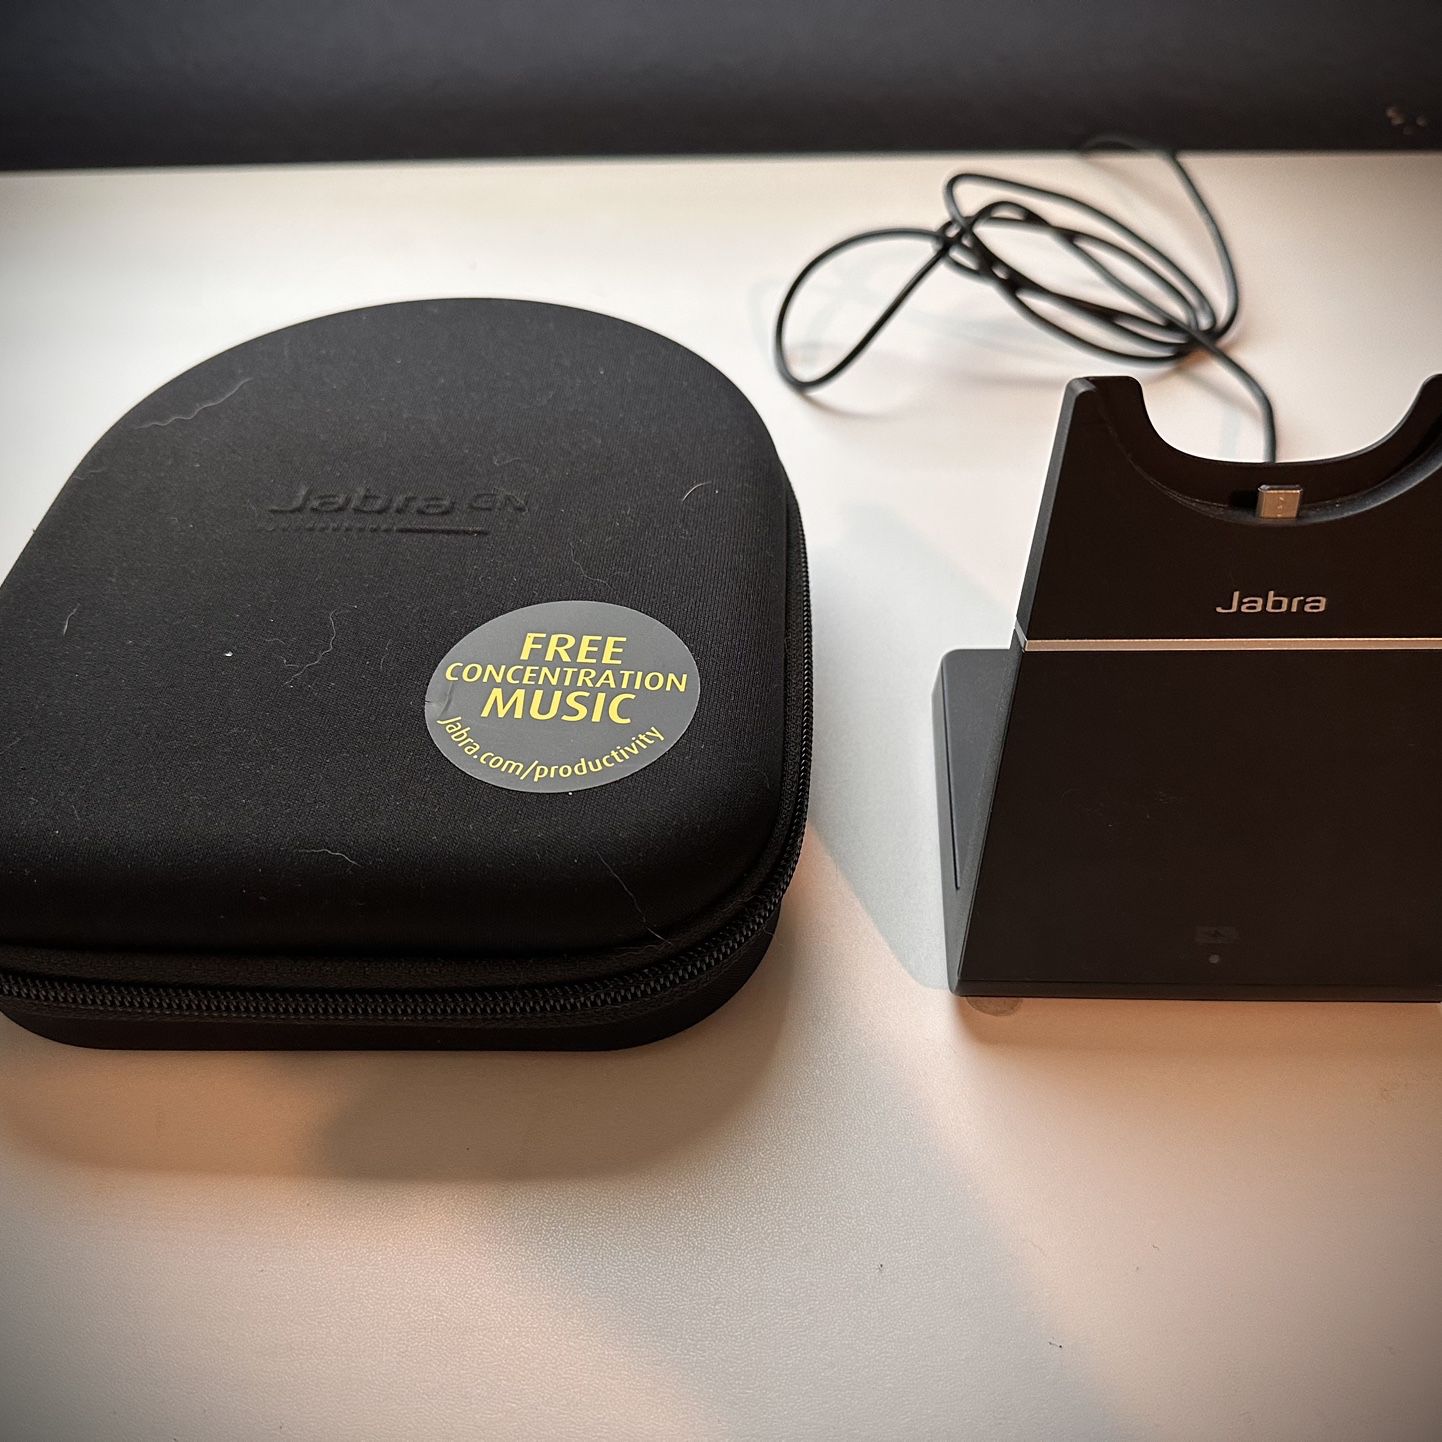 Jabra - Evolve 75 SE and Jabra Bluetooth Office Speaker